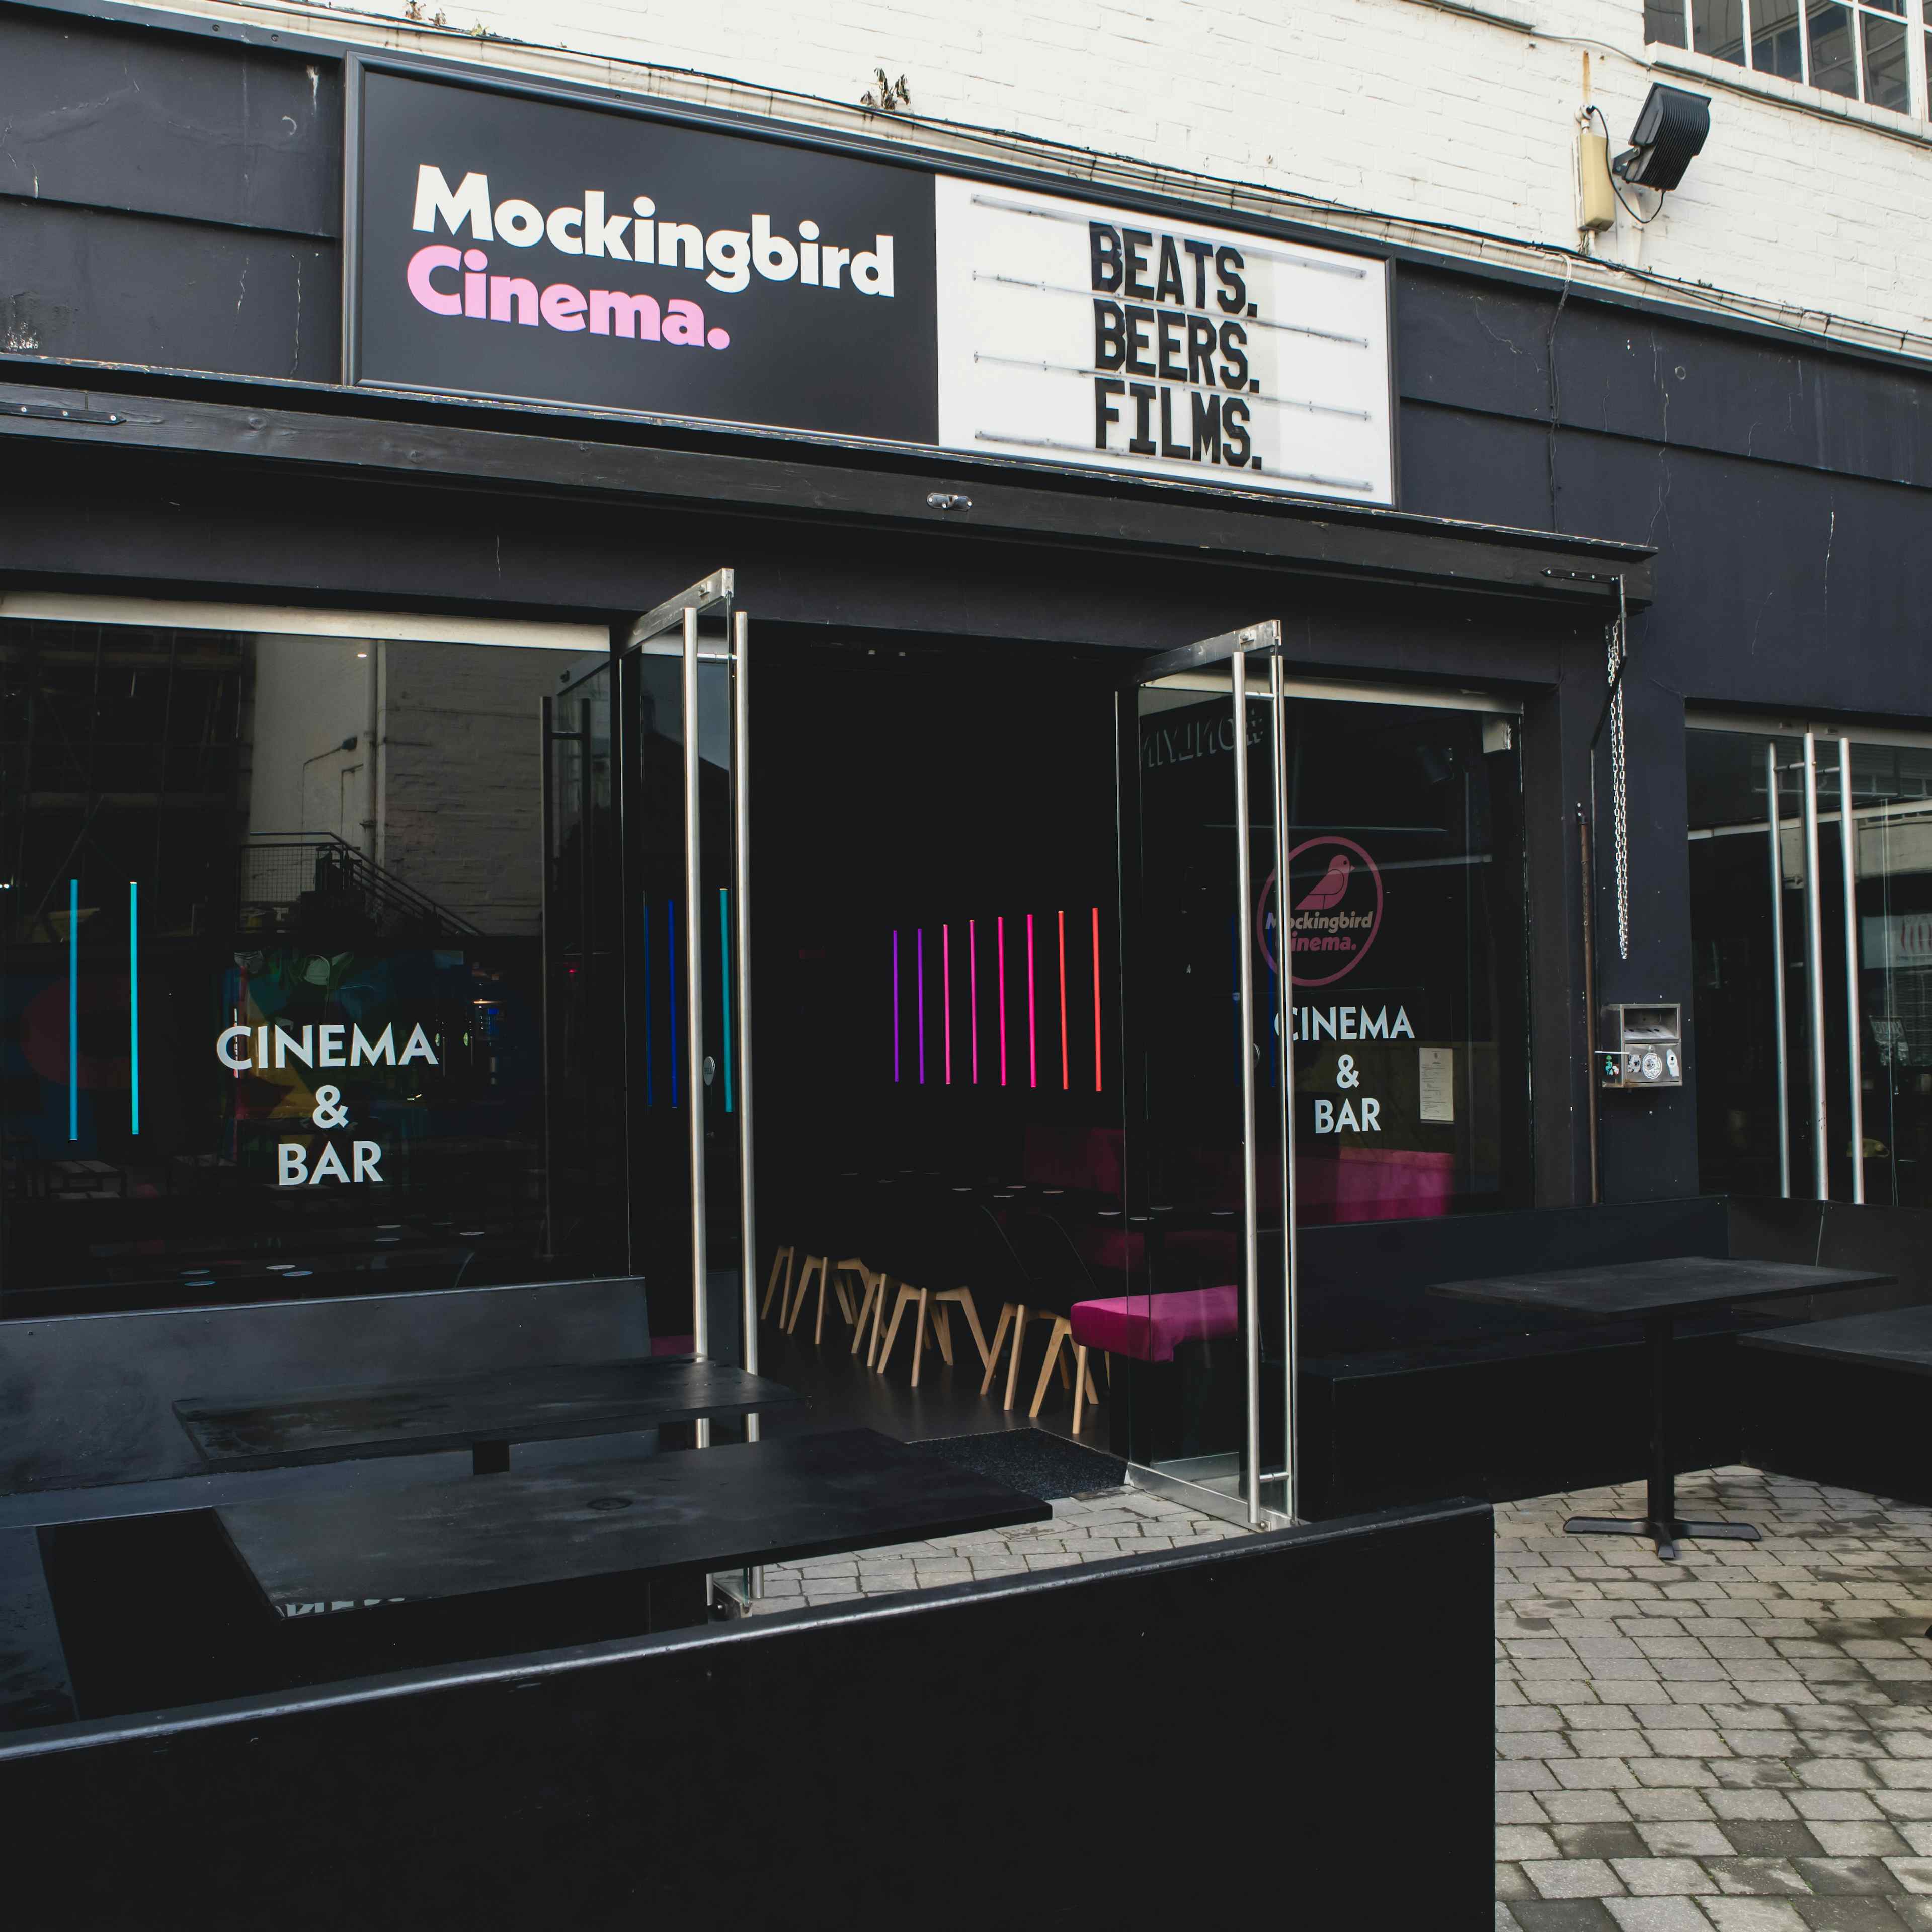 The Mockingbird Cinema and Sobremesa Bar - Mockingbird Cinema Bar image 1